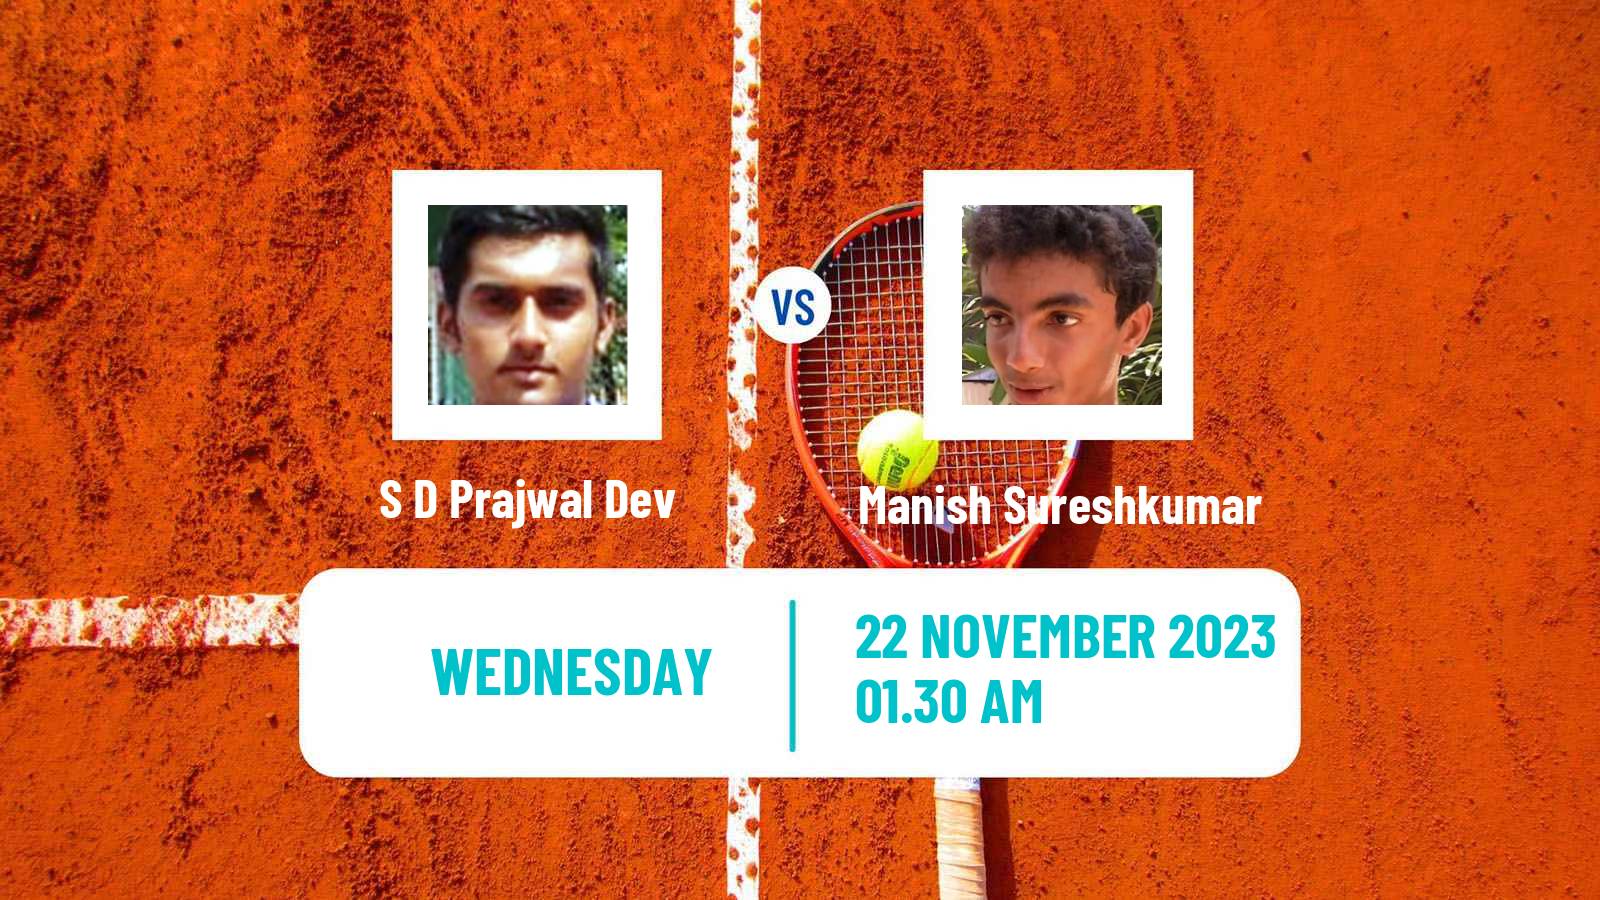 Tennis ITF M25 Mumbai Men S D Prajwal Dev - Manish Sureshkumar